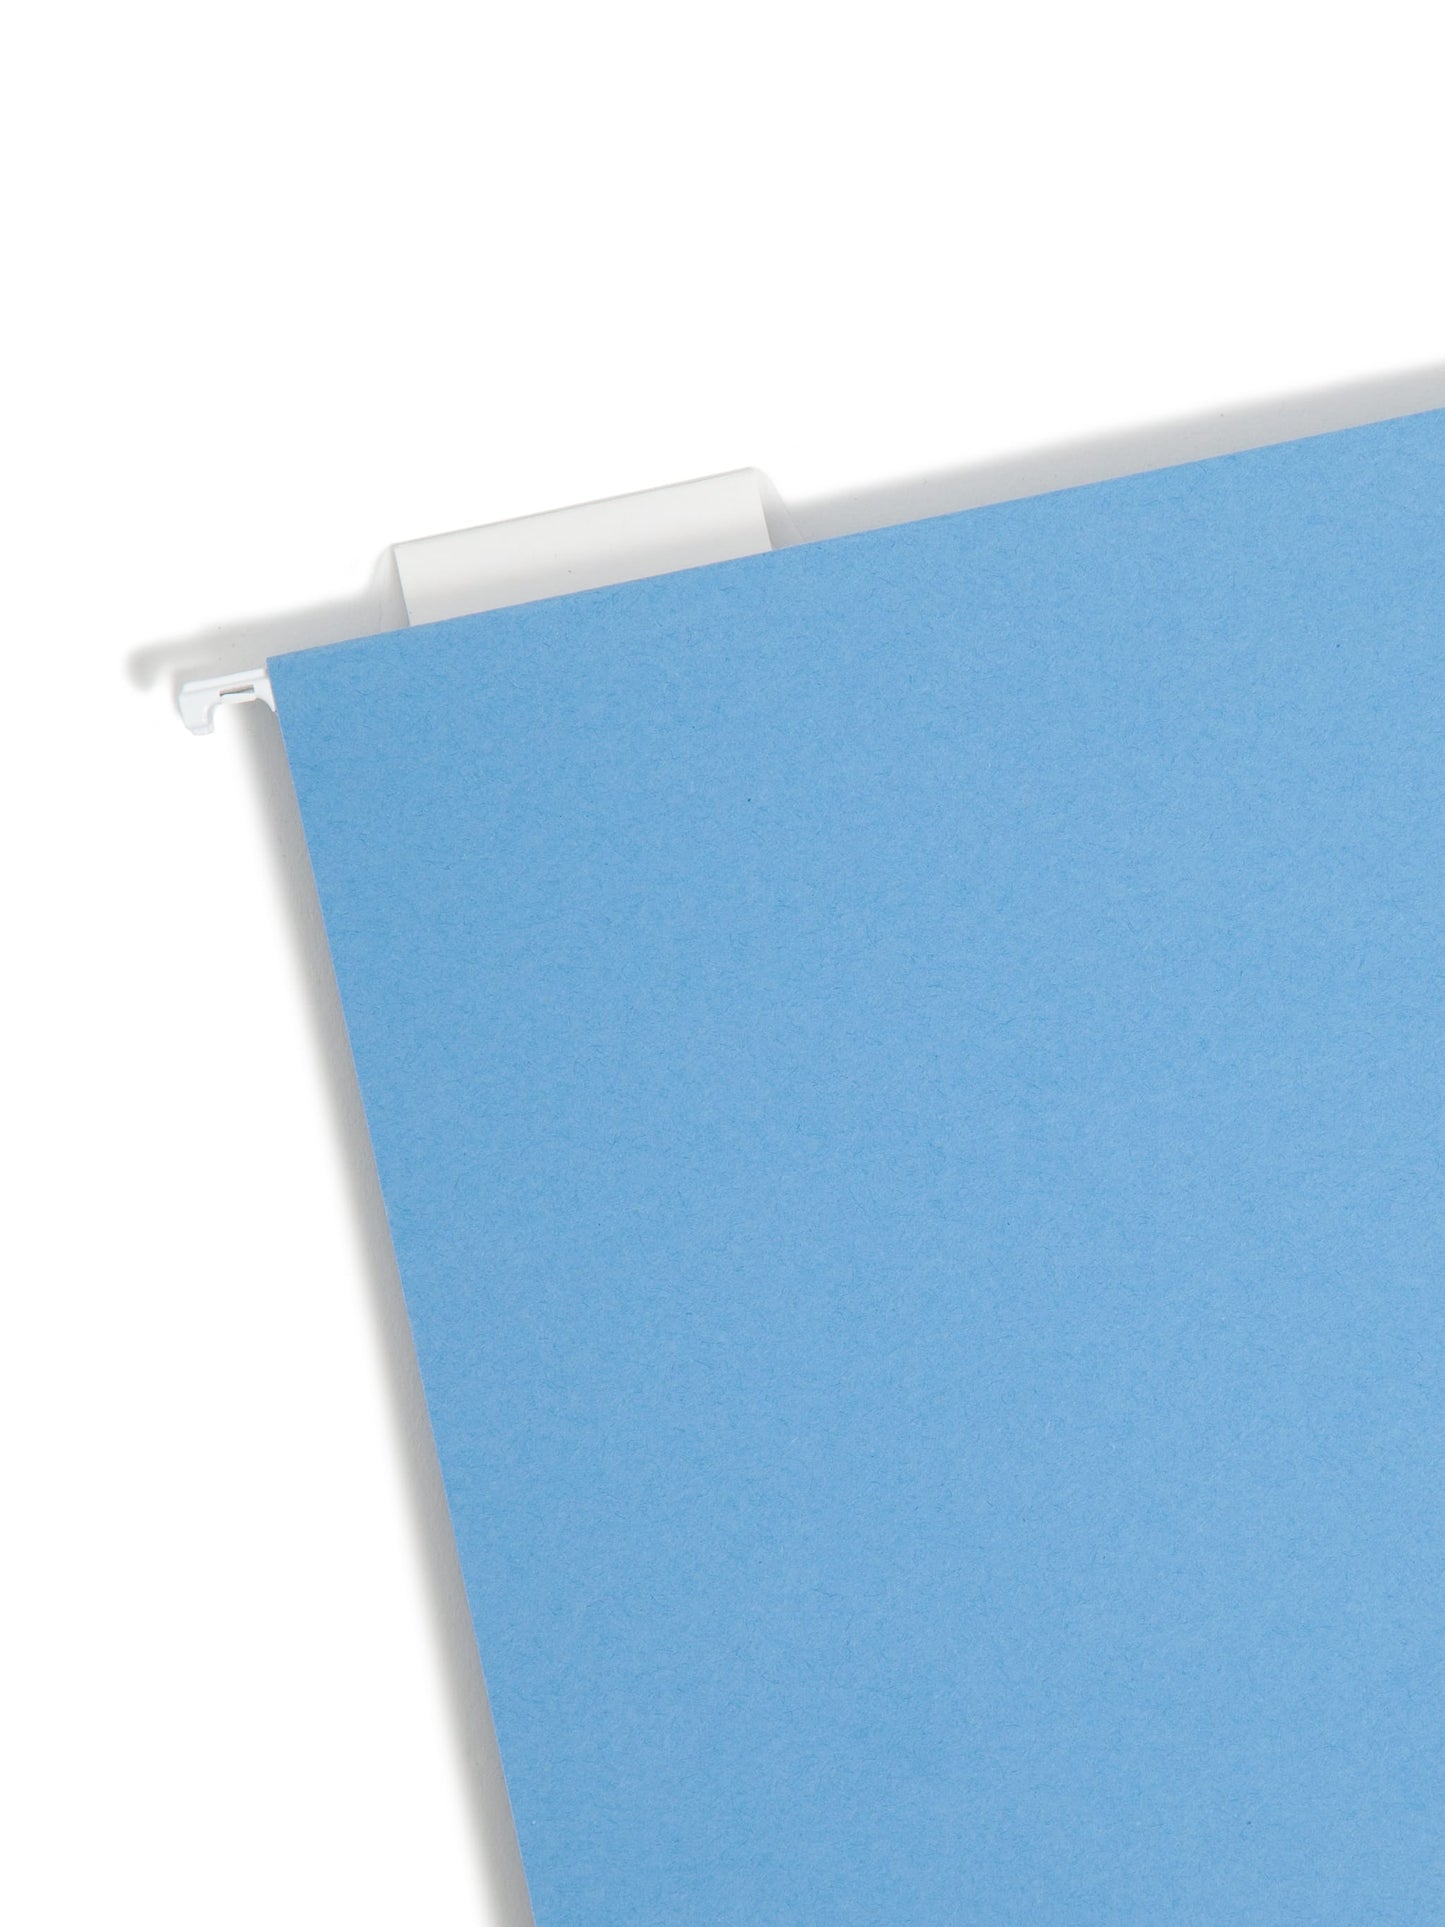 Hanging Box Bottom File Folders, 2 inch Expansion, Assorted Colors Color, Letter Size, Set of 25, 086486642644